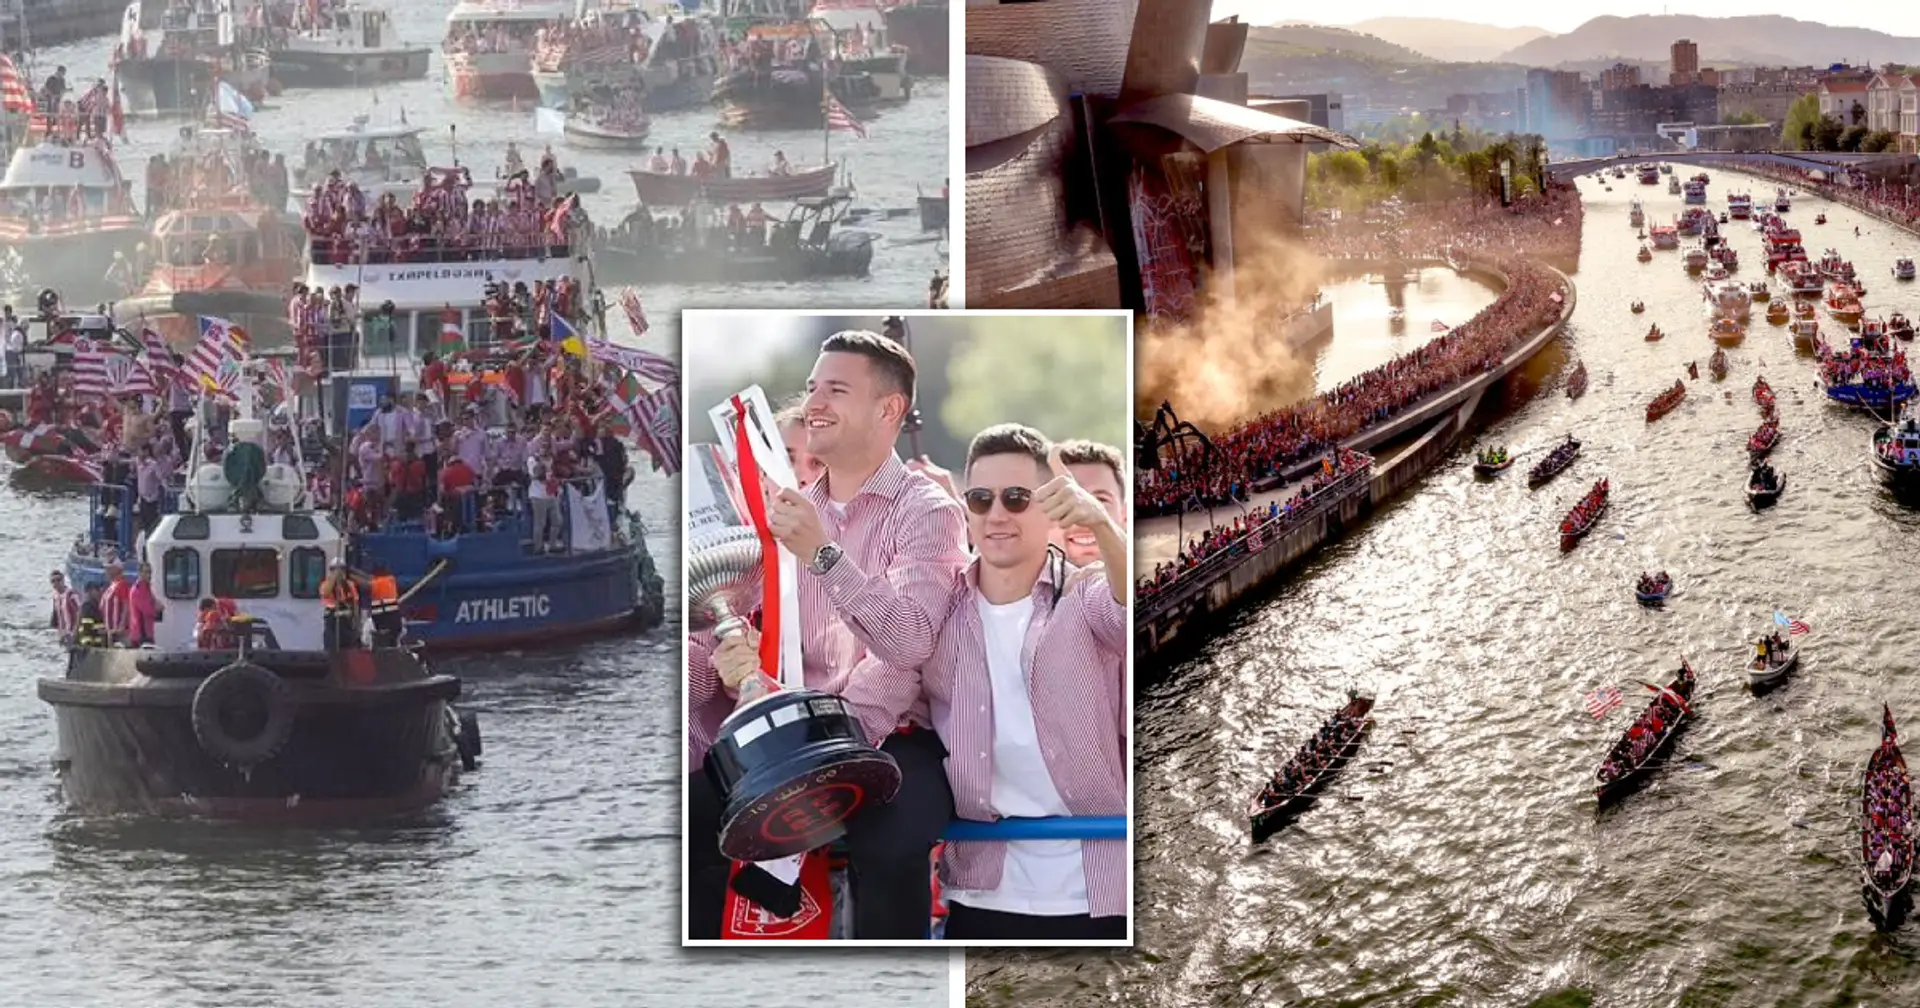 Athletic Bilbao set insane Copa del Rey celebration (photos and videos)